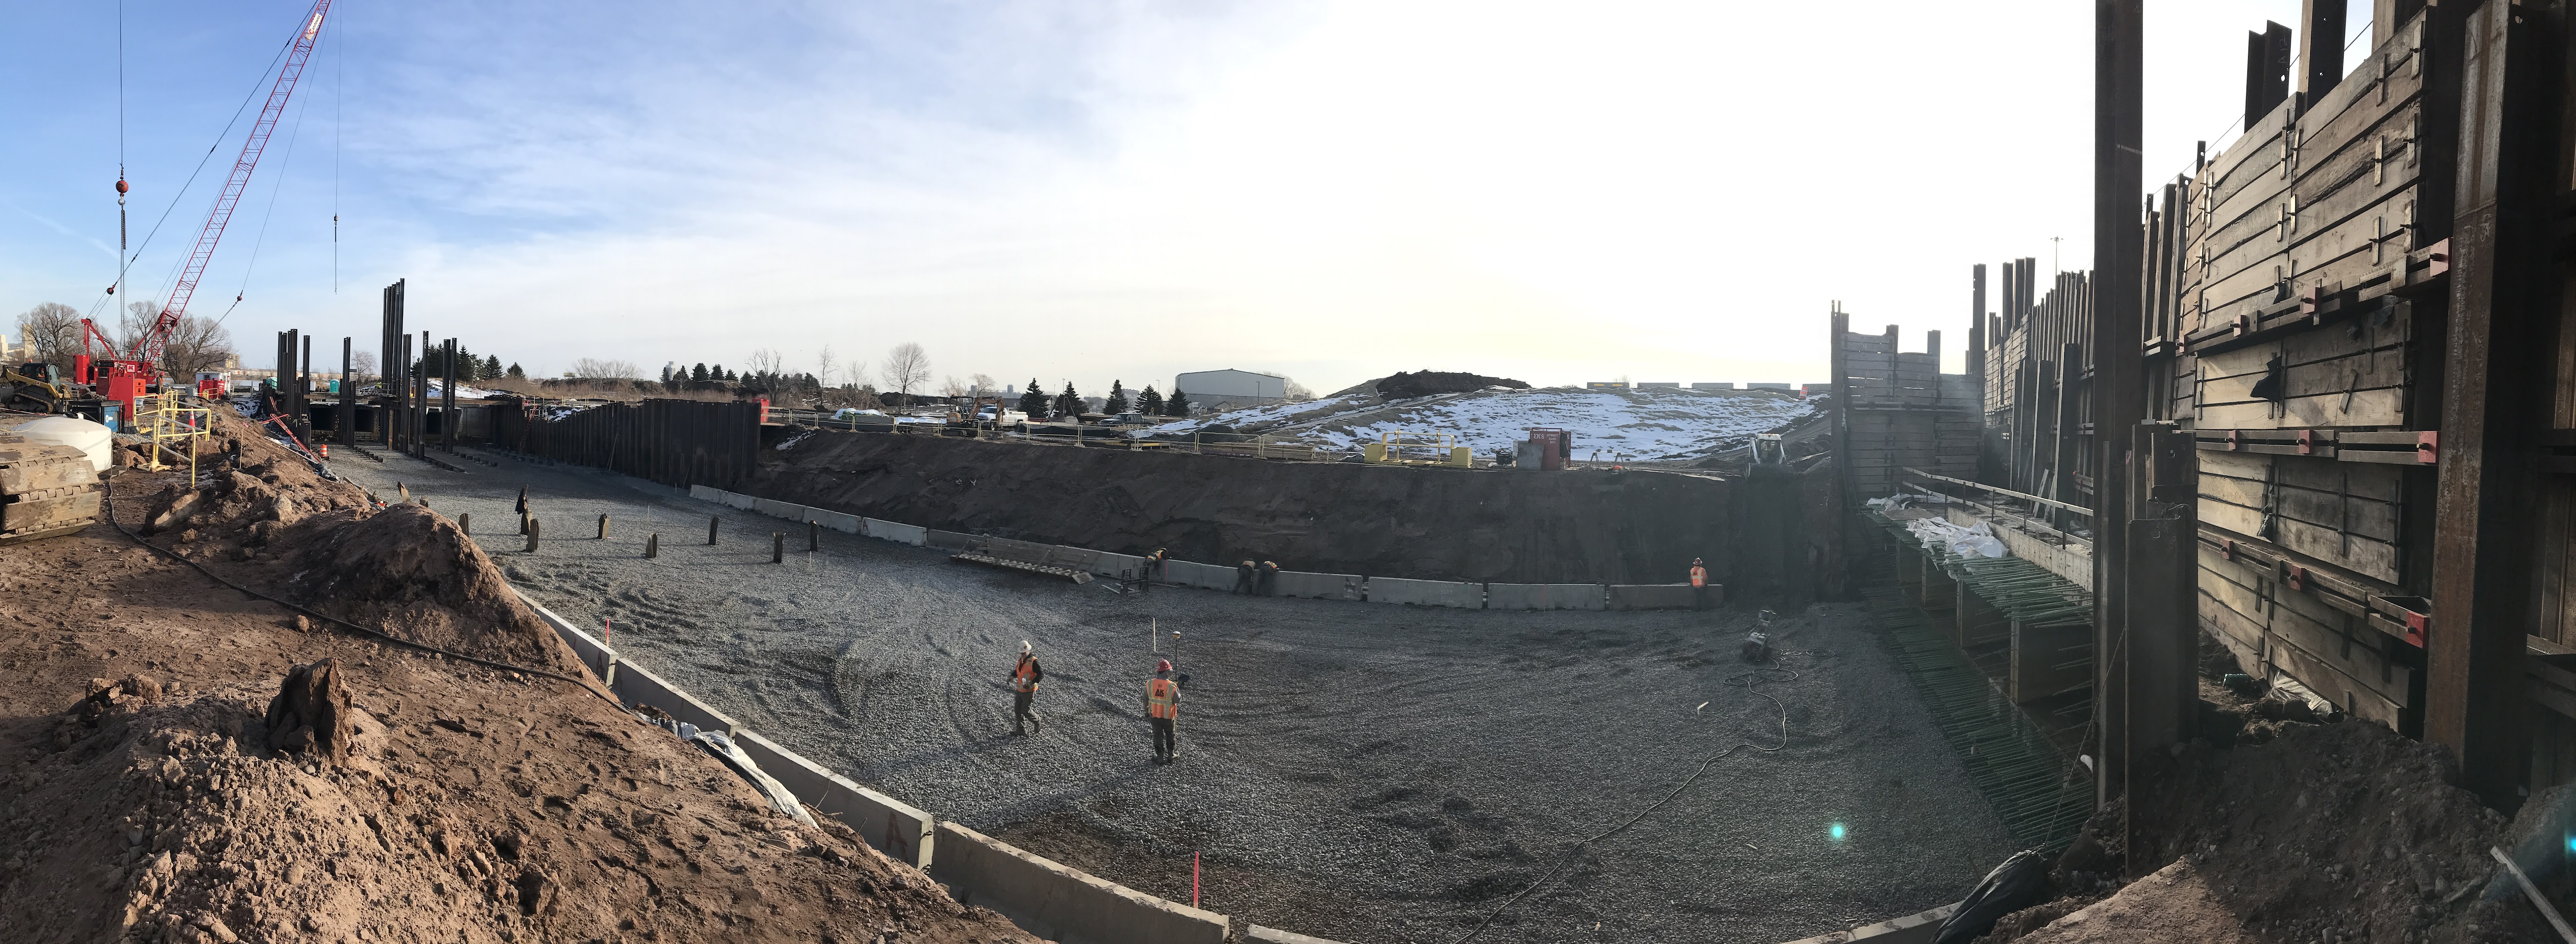 Miller and Coffee Creek box culvert – construction progress of center 300 foot-long section